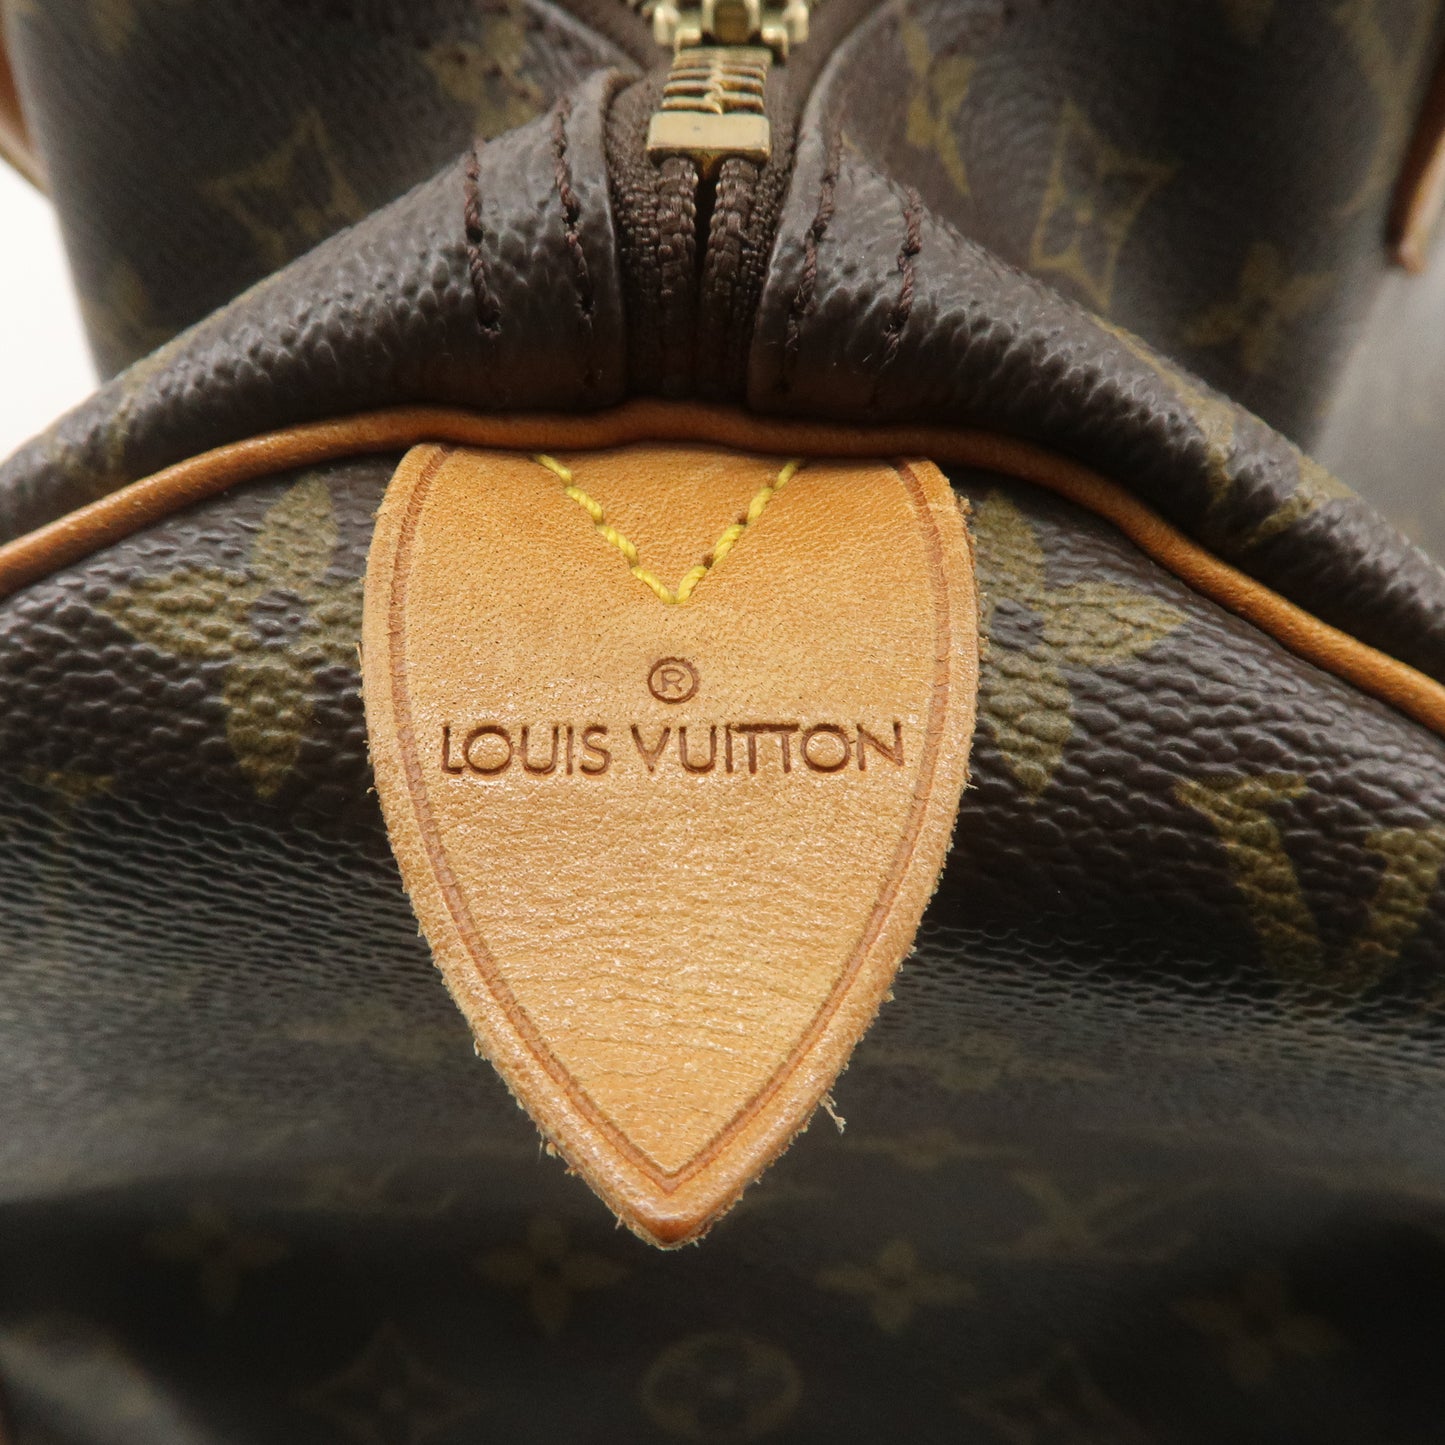 Louis Vuitton Monogram Speedy 40 Hand Bag Boston Bag M41522